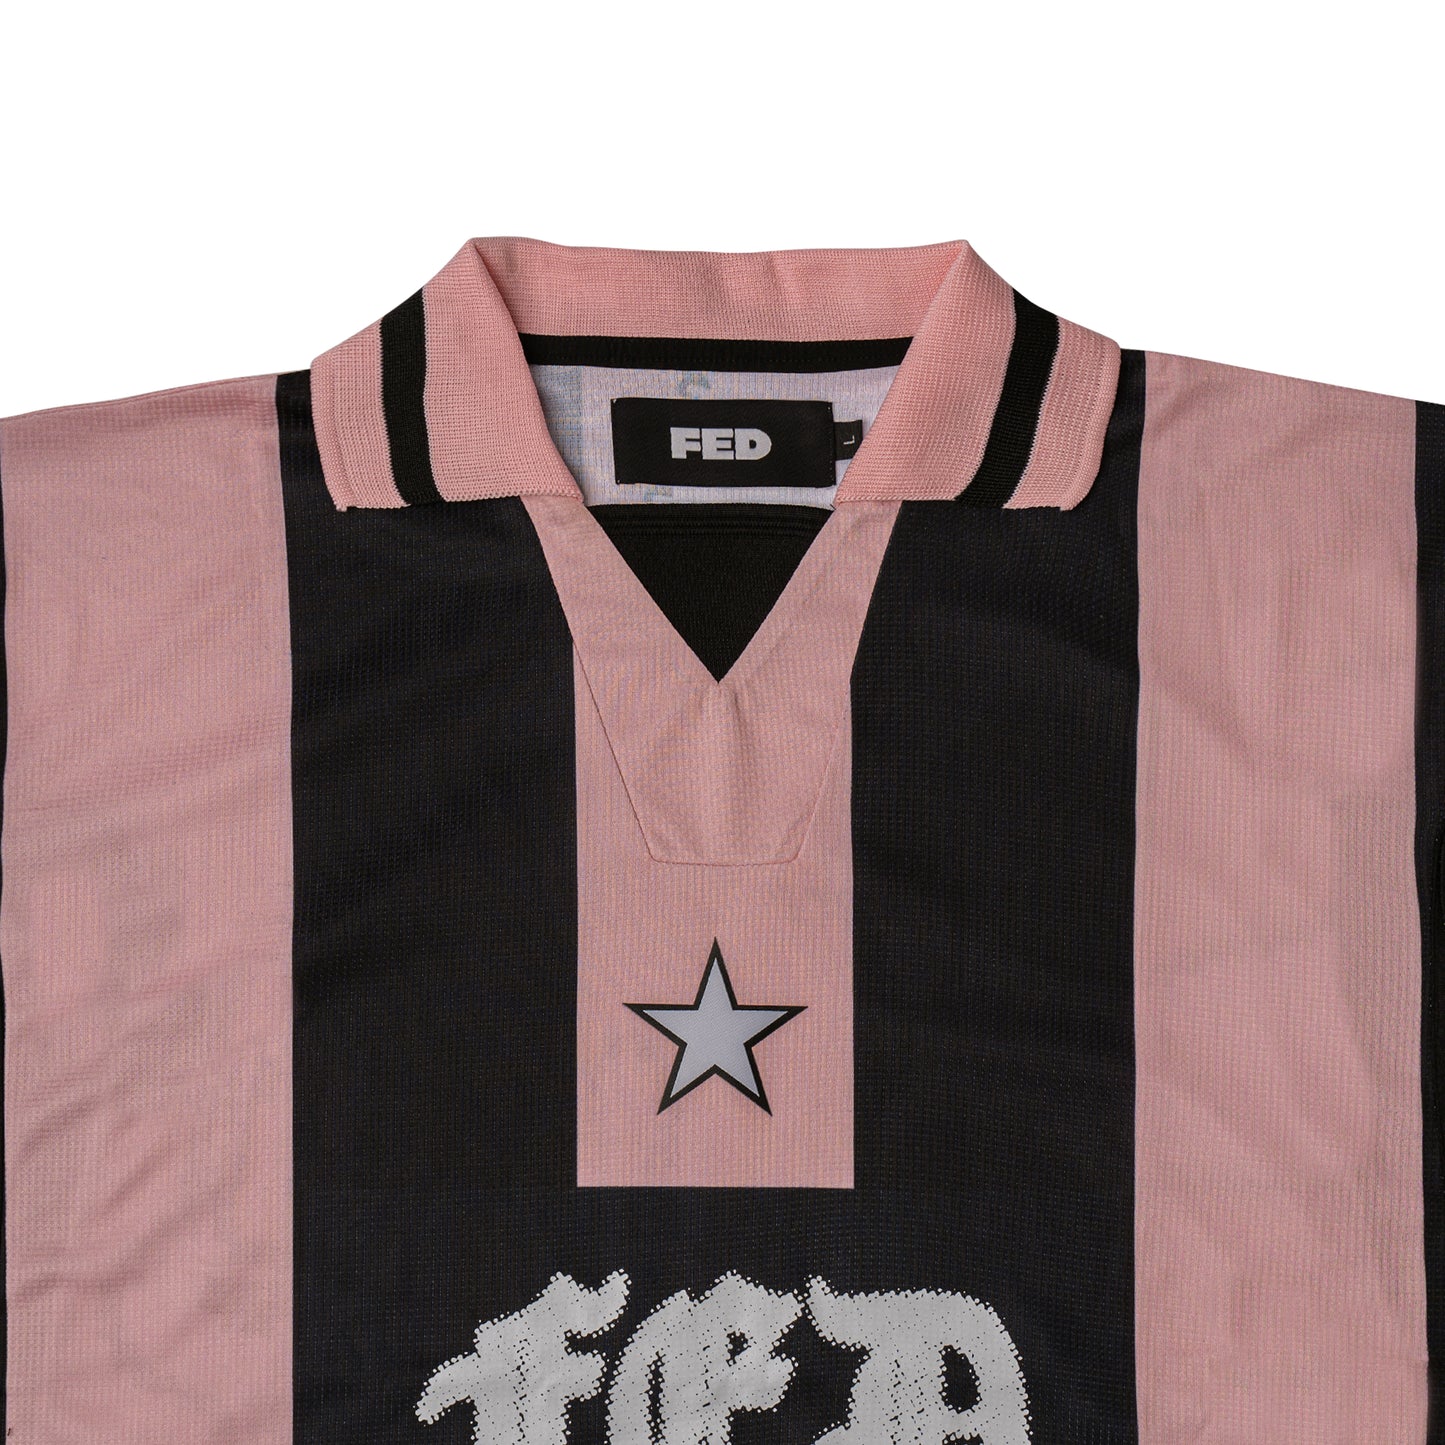 FED PUNK Jersey (Black/Pink)